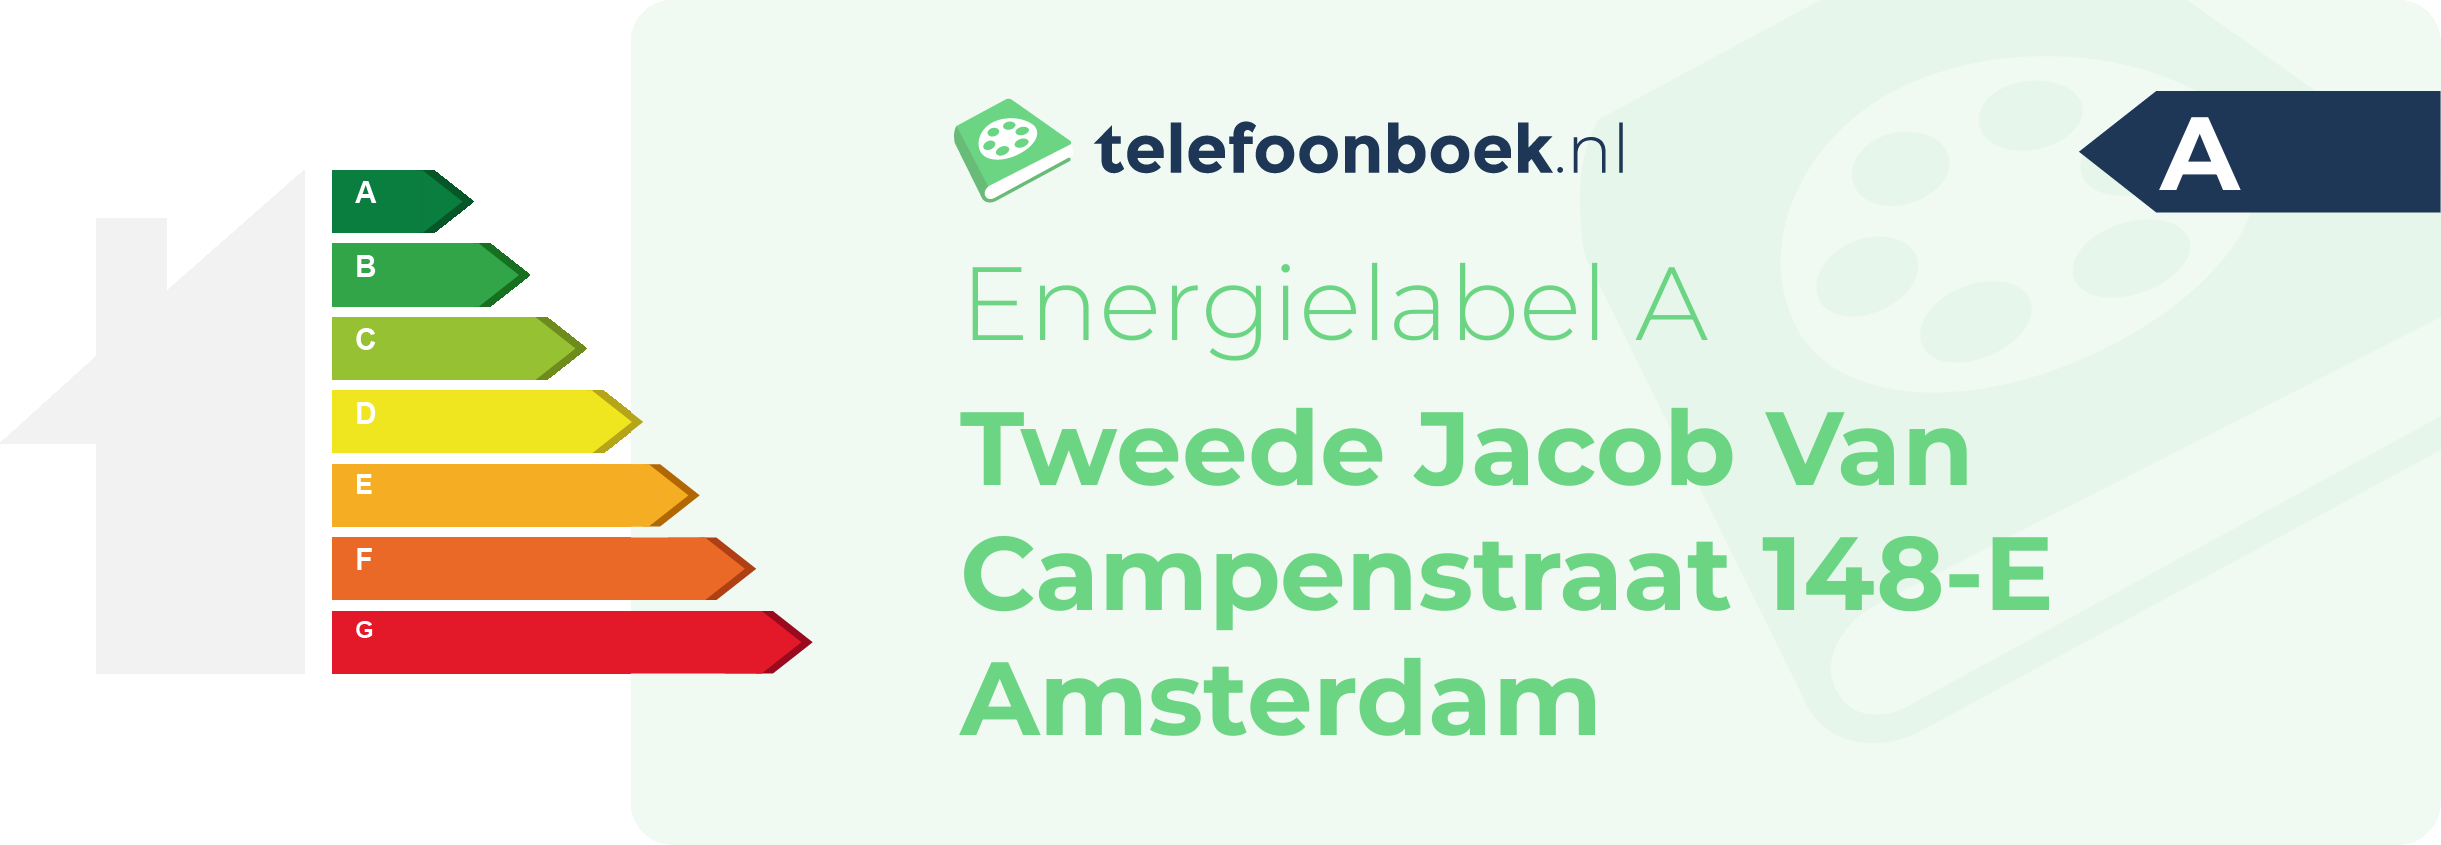 Energielabel Tweede Jacob Van Campenstraat 148-E Amsterdam